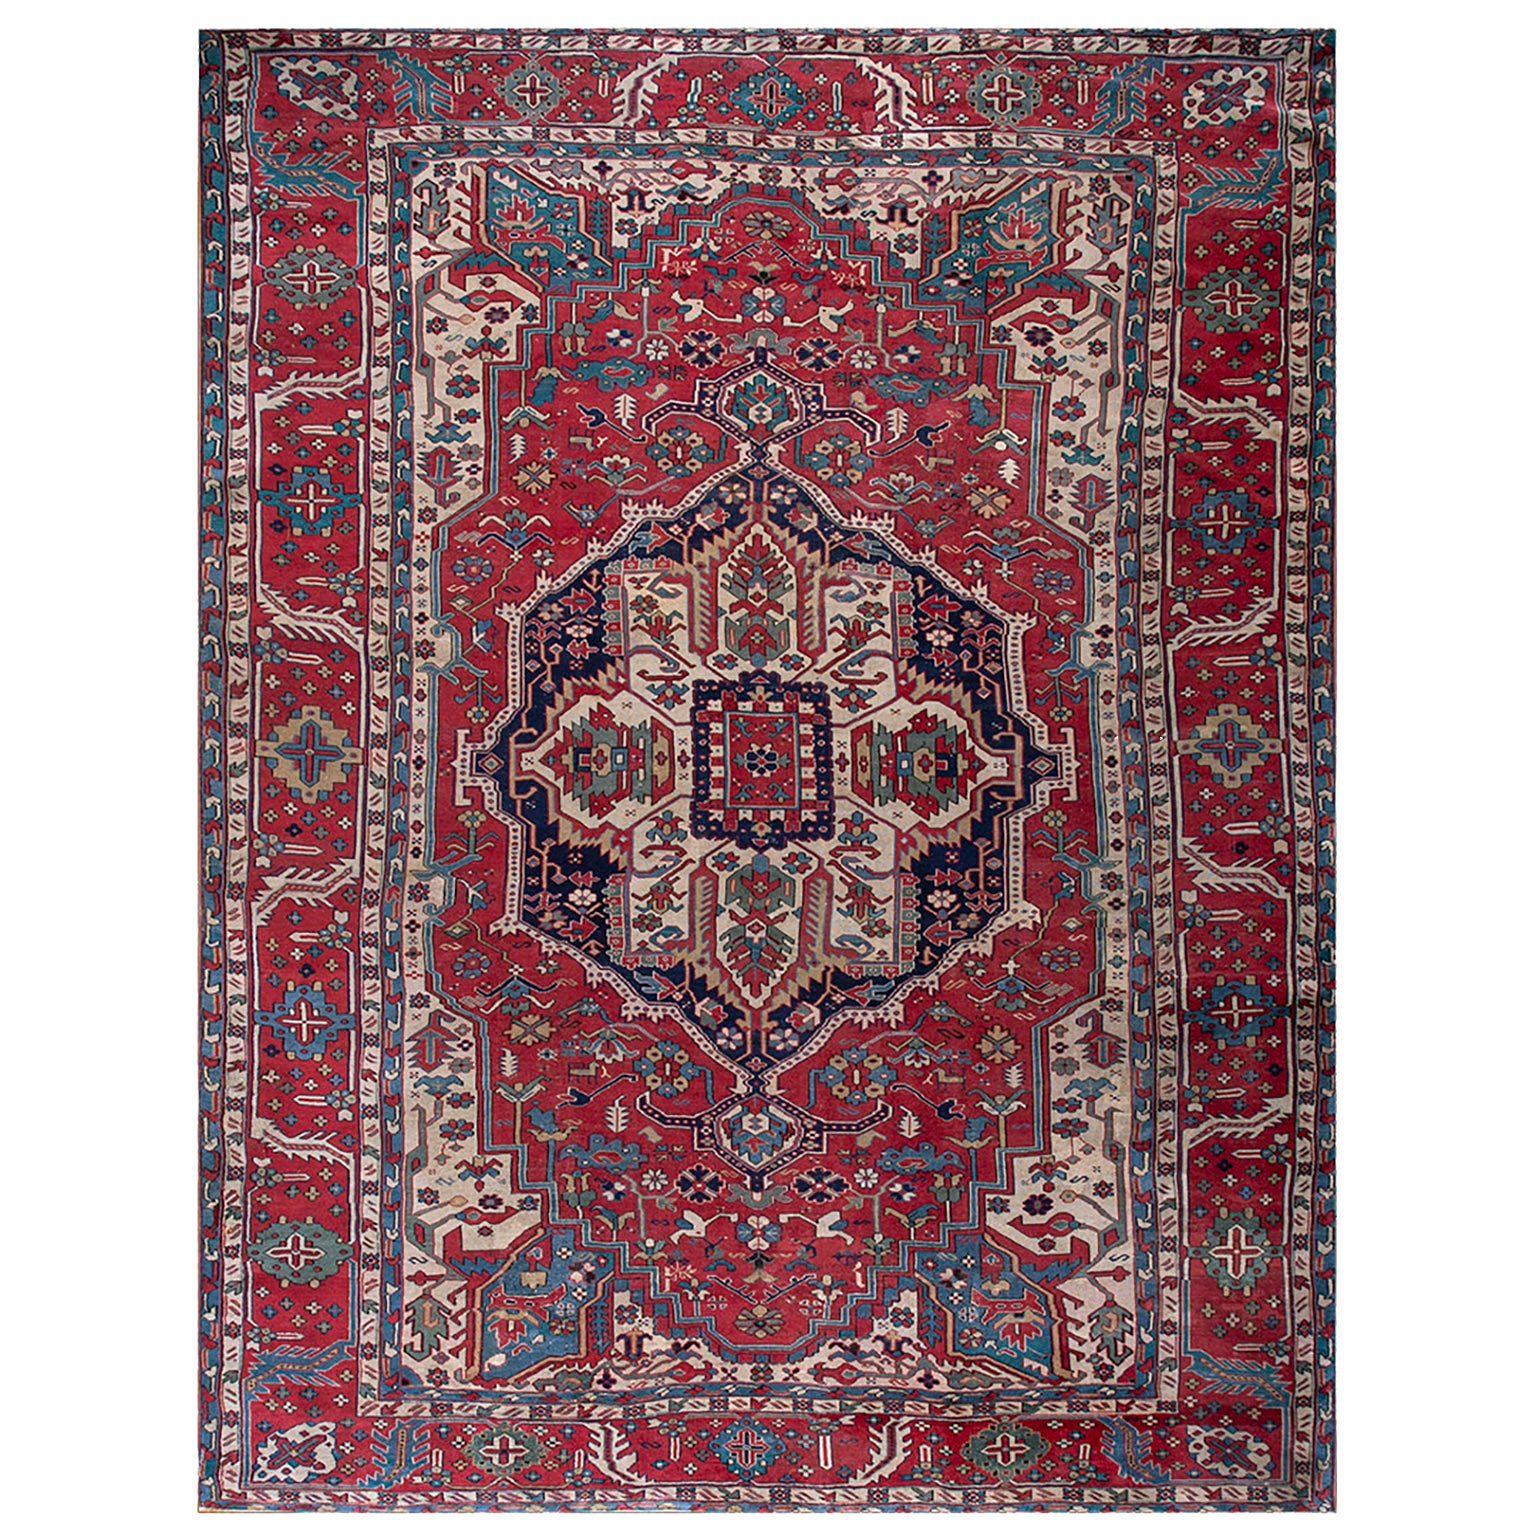 Late 19th Century Persian Serapi Carpet ( 12'3" x 15'10" - 373 x 483 ) For Sale